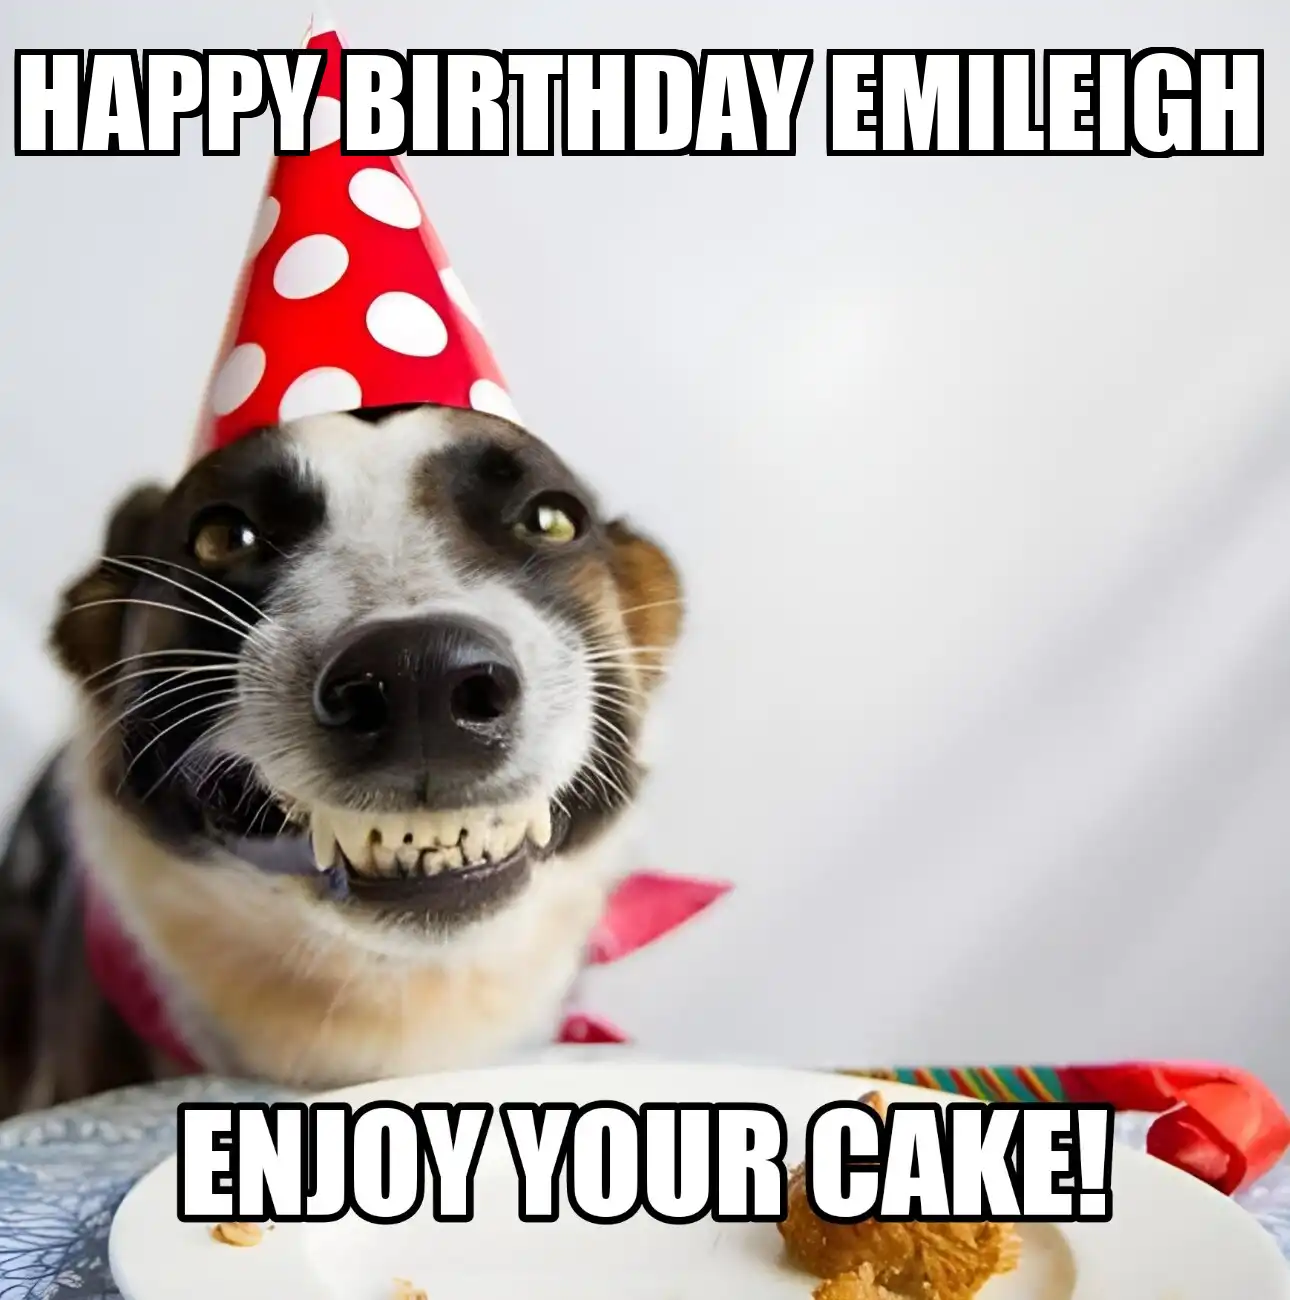 Happy Birthday Emileigh Enjoy Your Cake Dog Meme